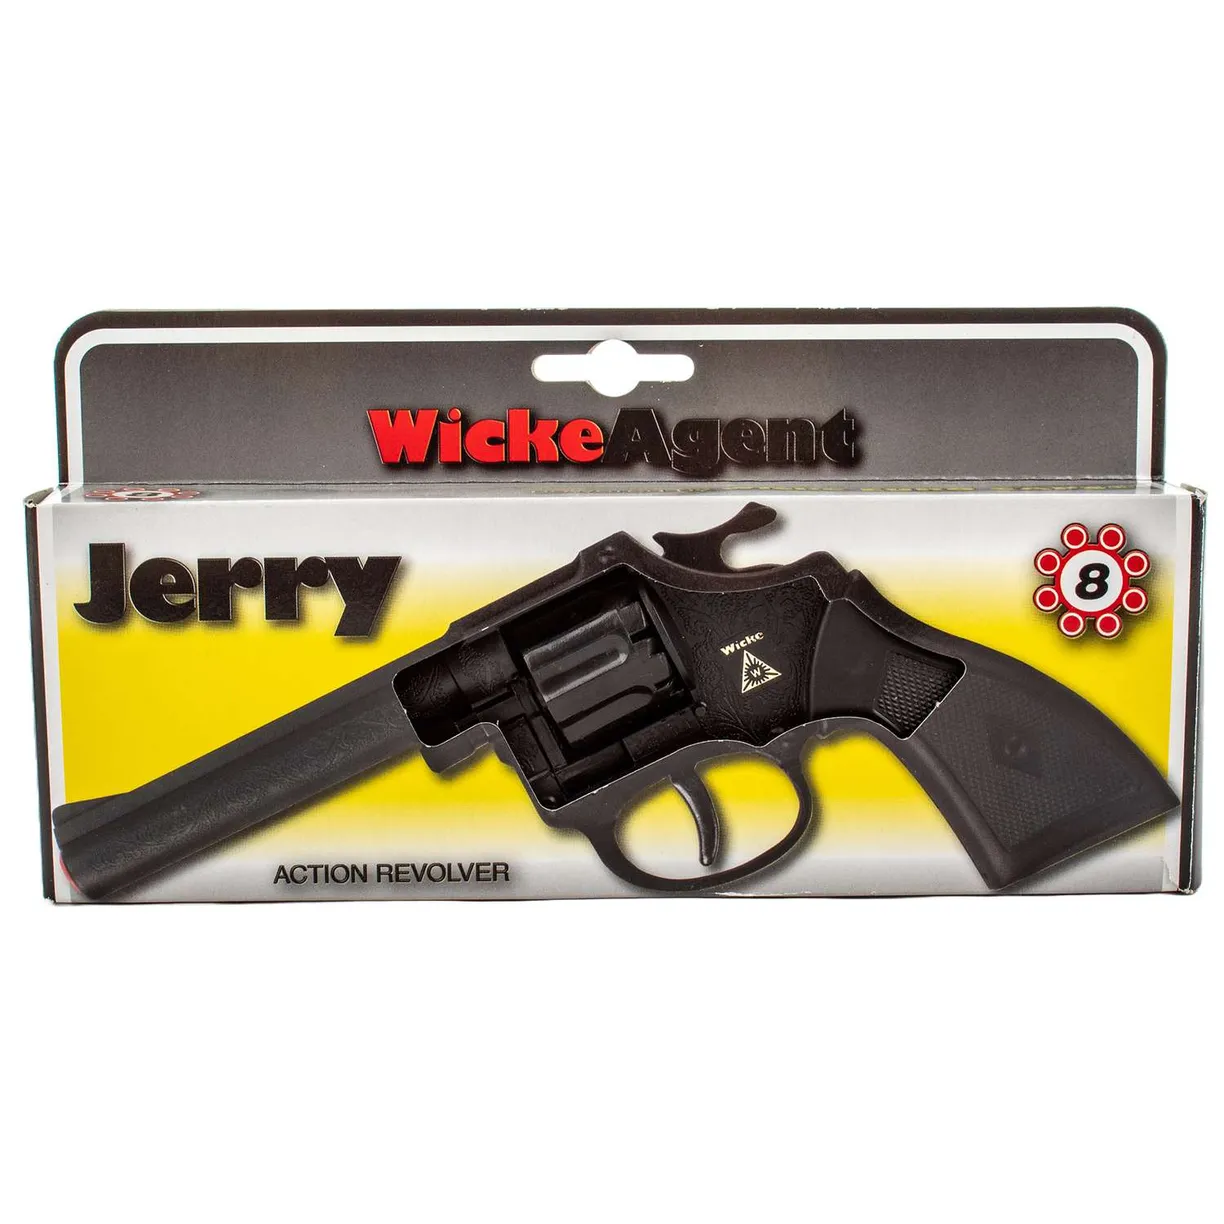 Western Пистолет Jerry, 8 зарядов - фото